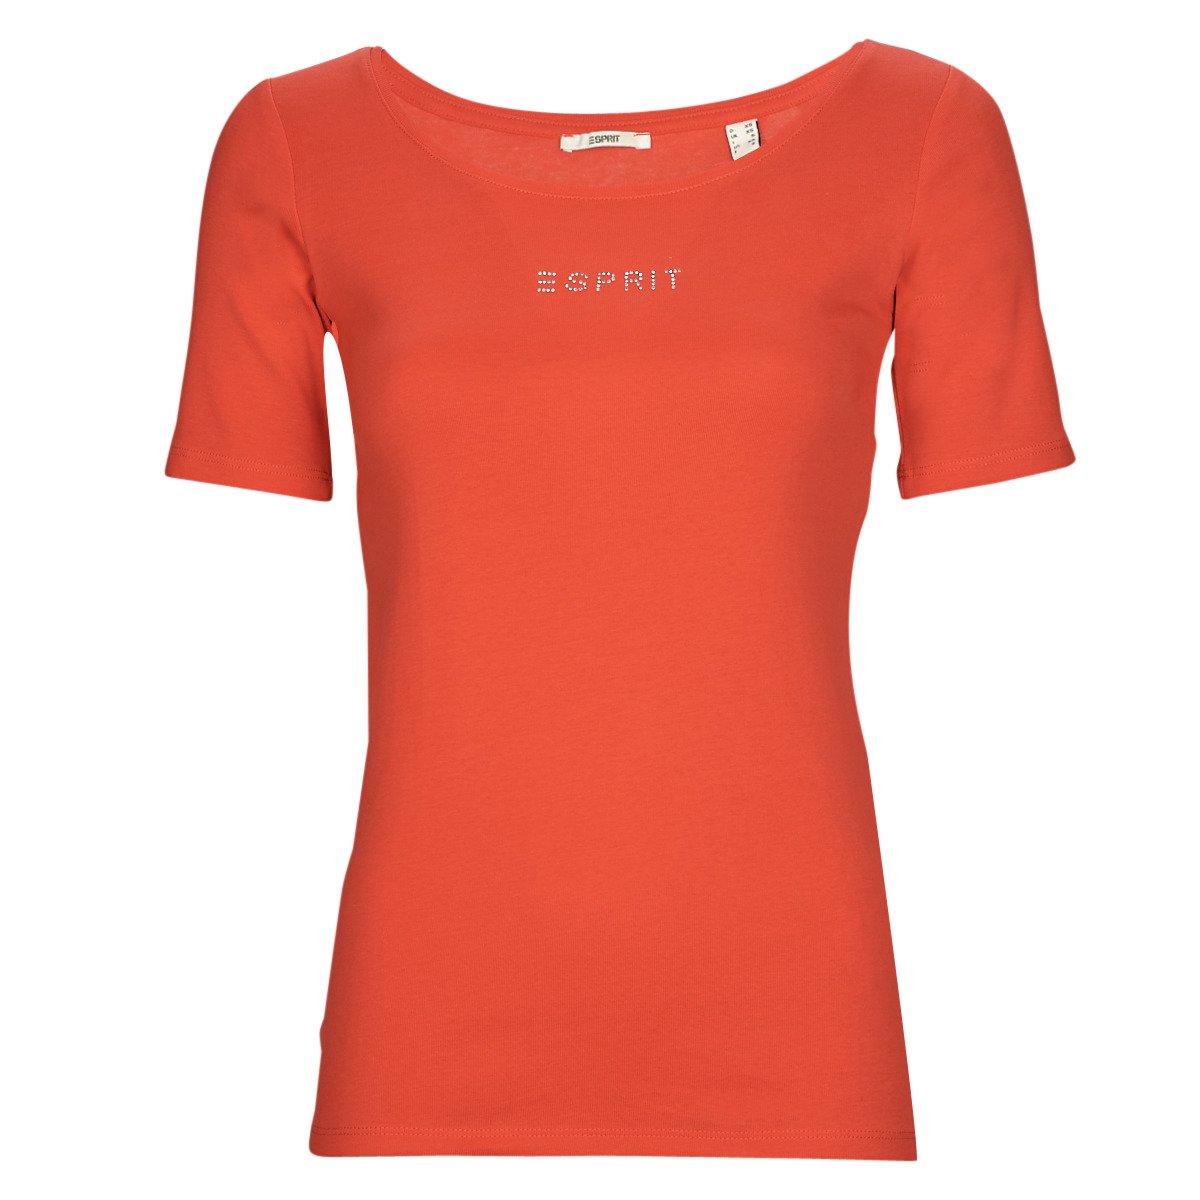 Vêtements Femme Reclaimed Vintage Inspired Summer Party T-shirt i gul TSHIRT SL Rouge